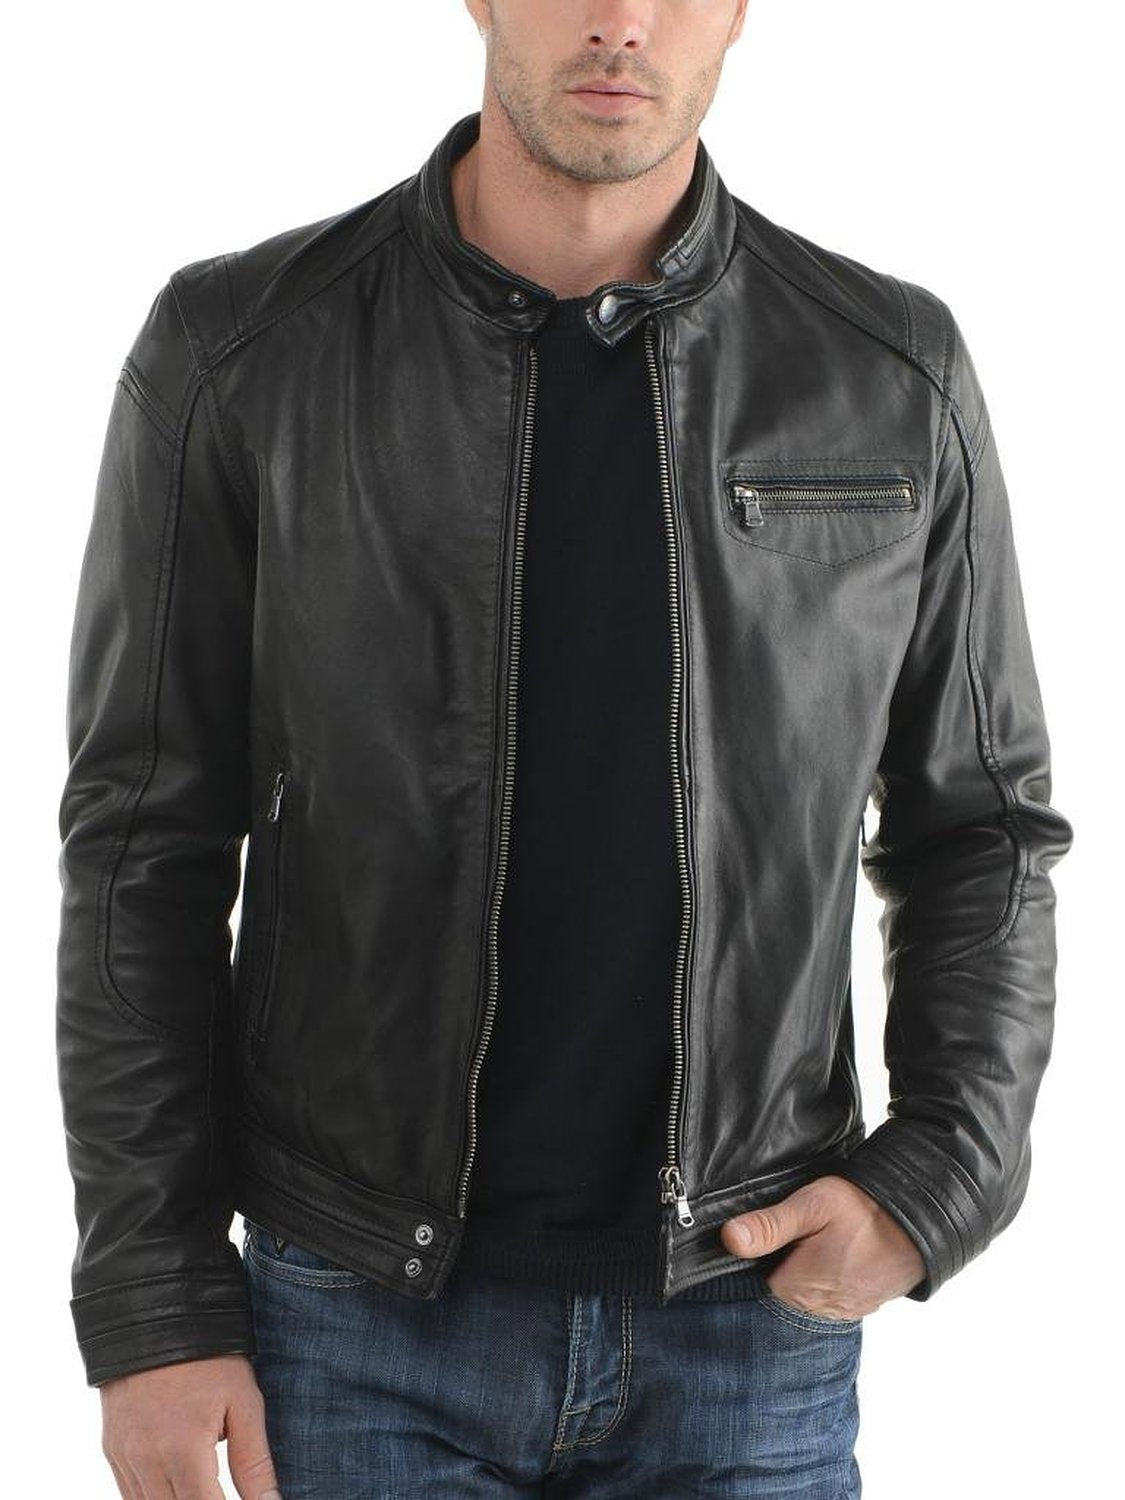 Leather Jackets Hub Mens Genuine Cowhide Leather Jacket (Black, Classic Jacket) - 1501283